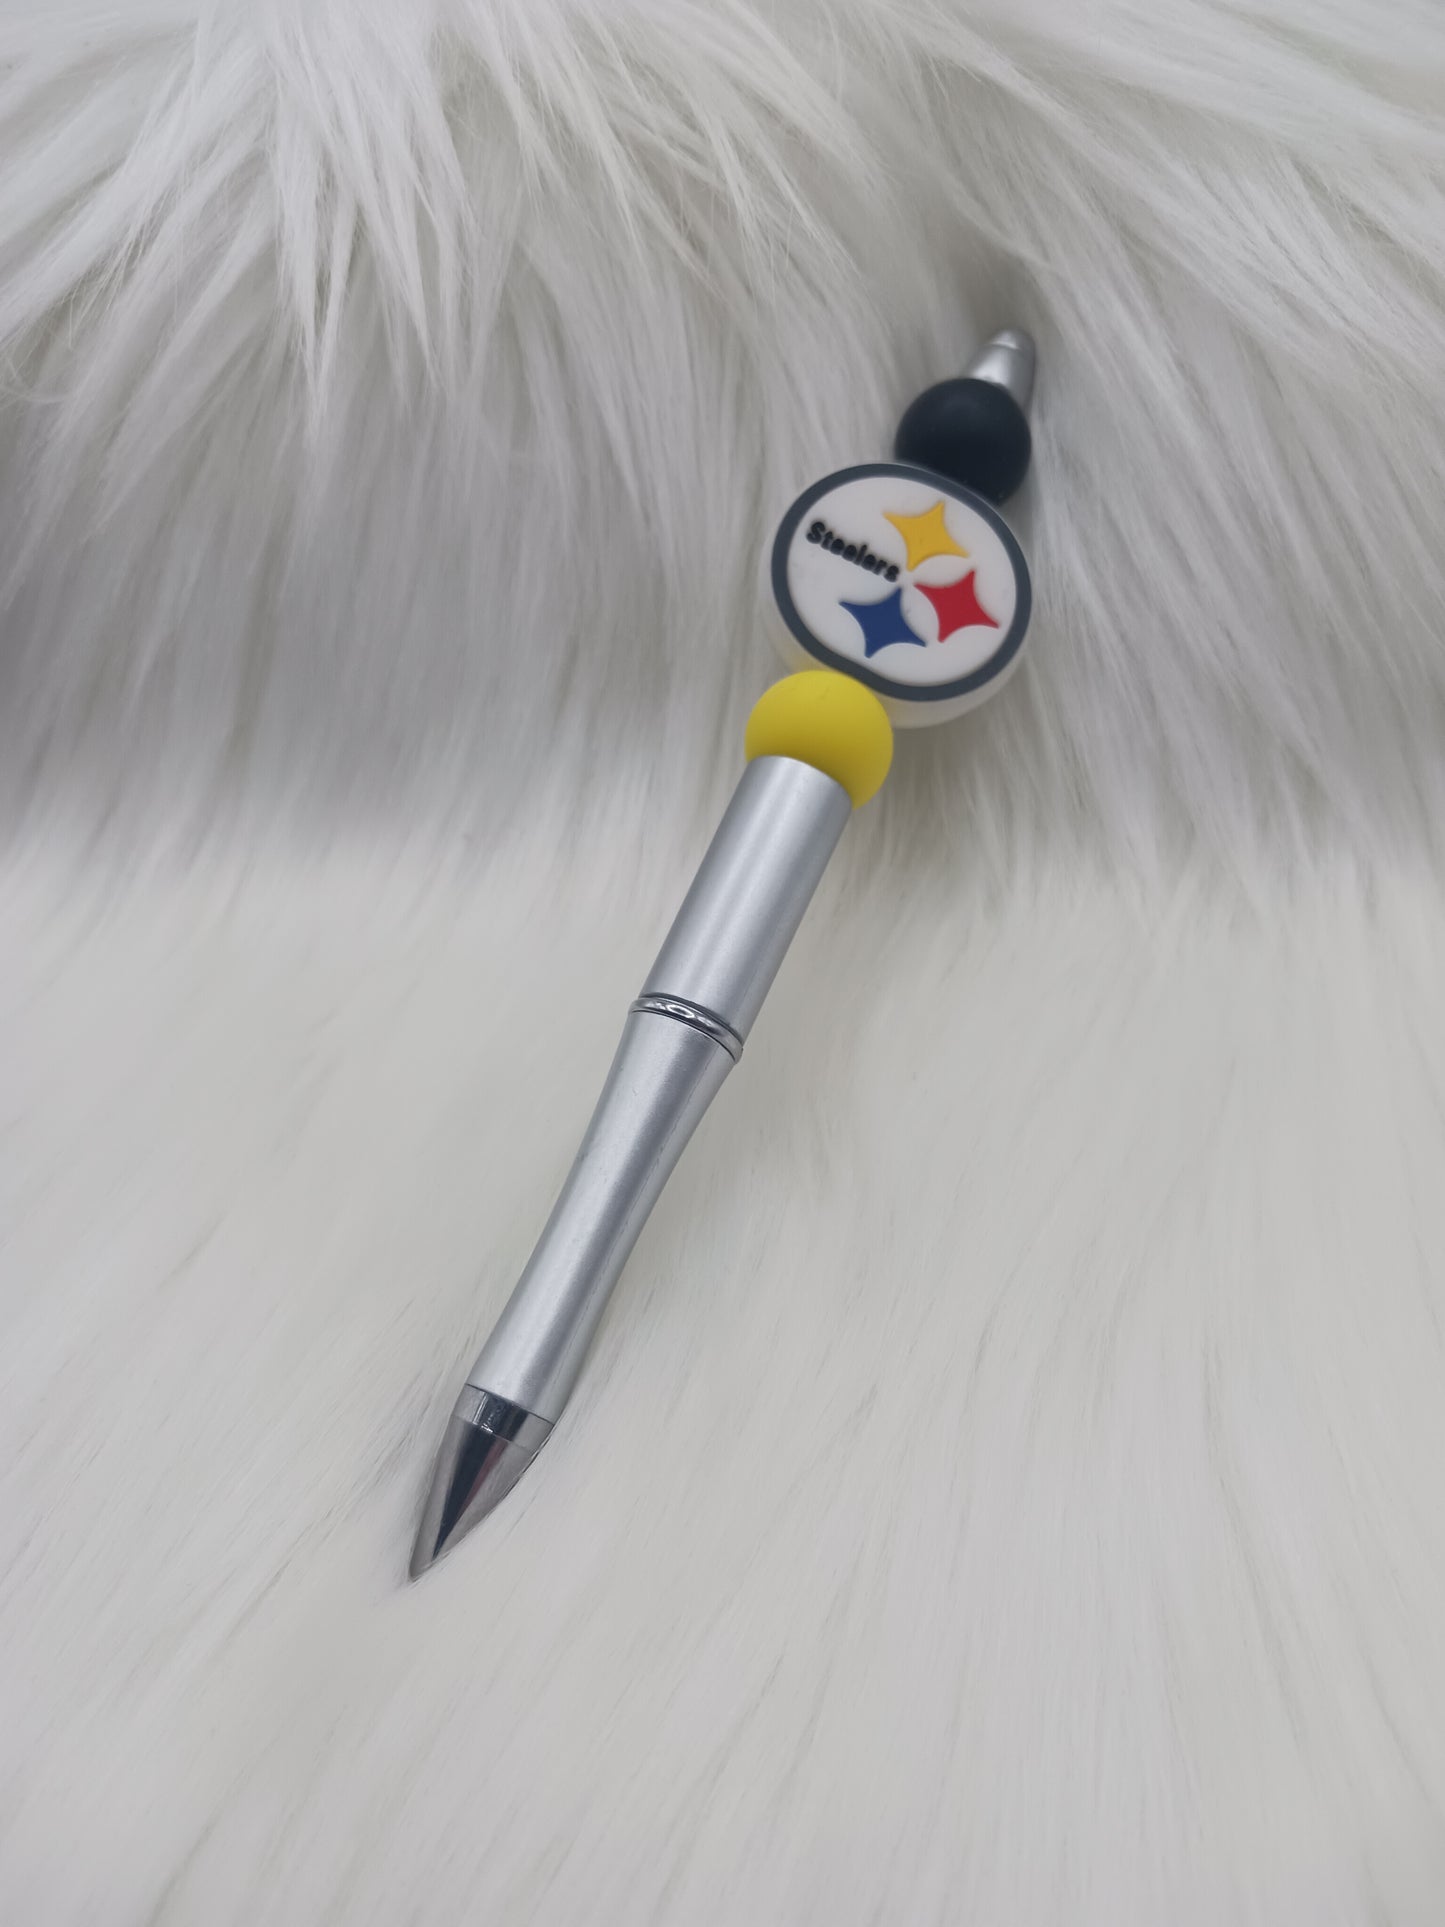 Pittsburgh team beaded pen